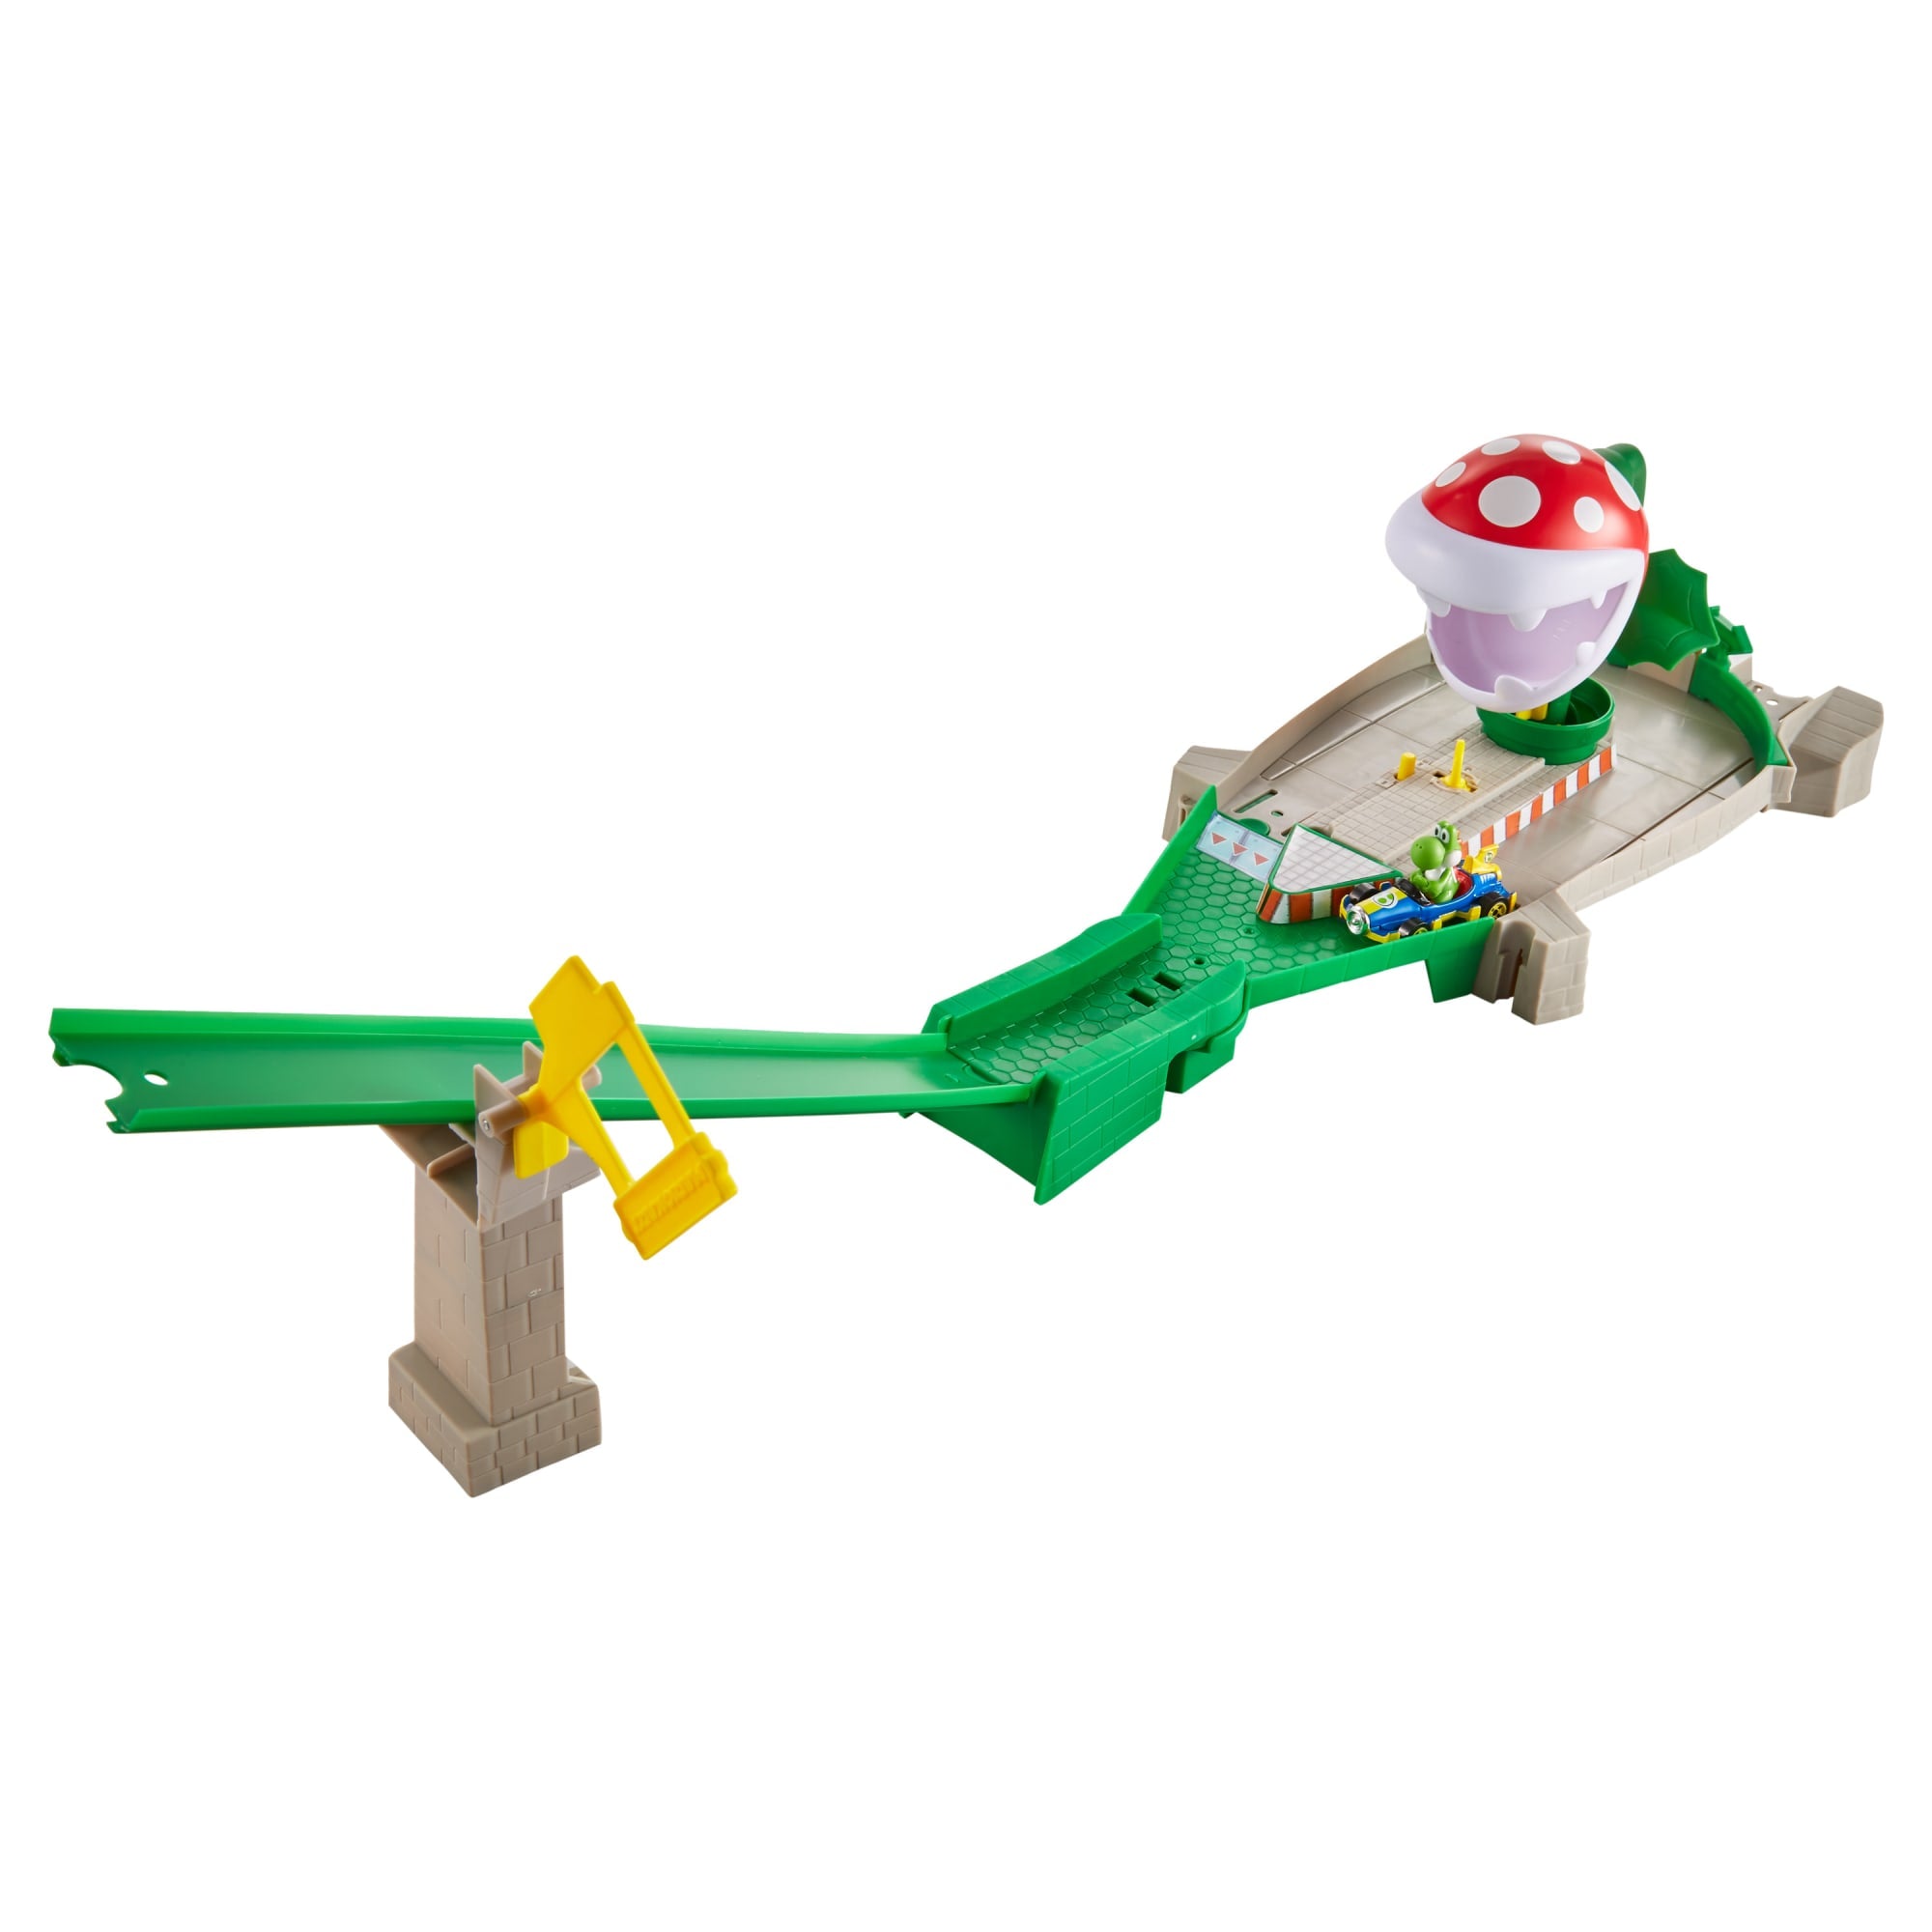 Hot Wheels Mariokart Piranha Plant Slide Track Set | Mattel